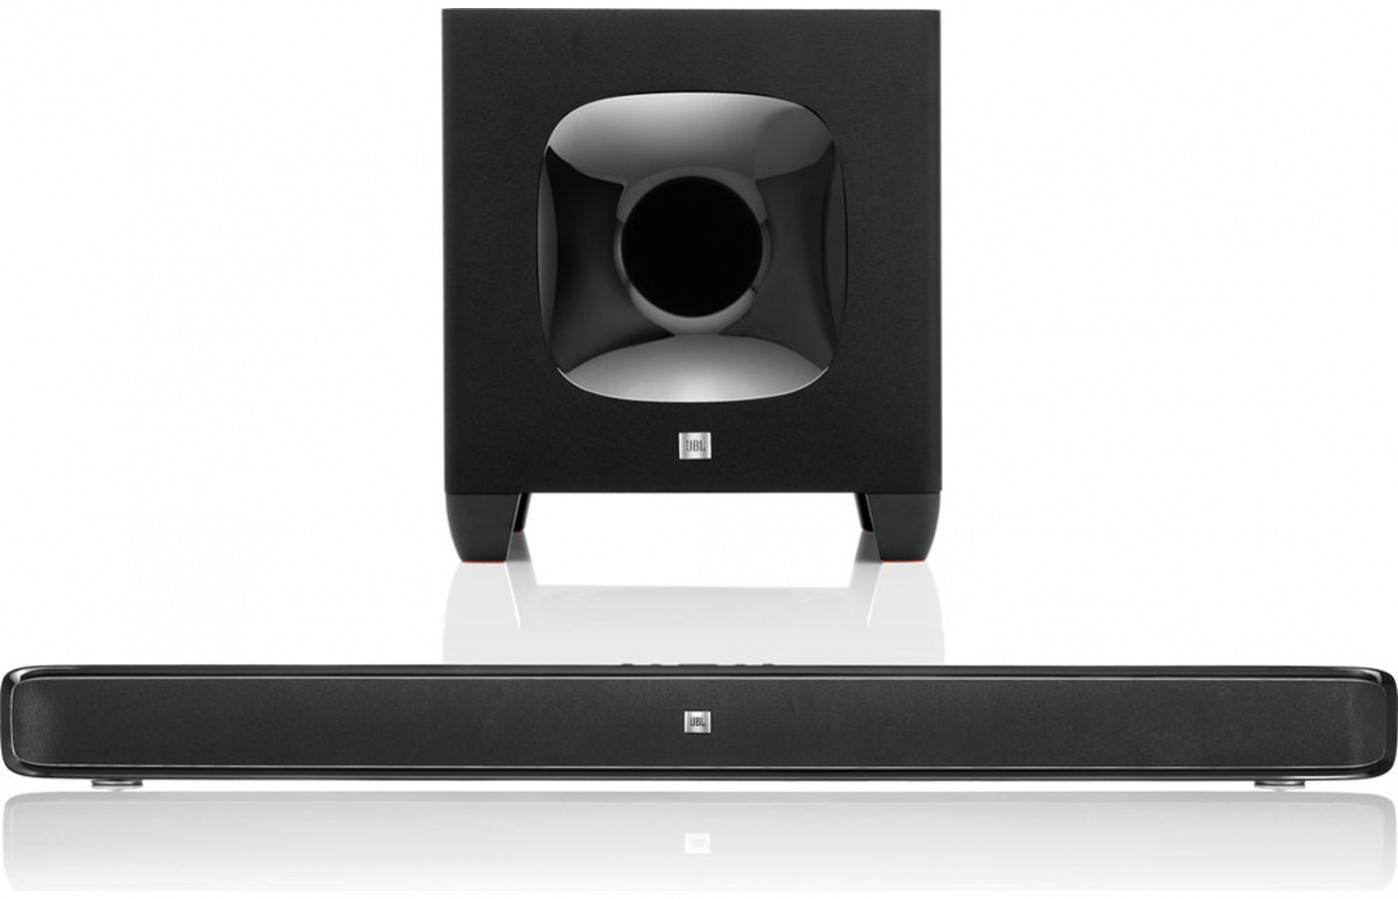 Soundbar System Review - HDTVs and